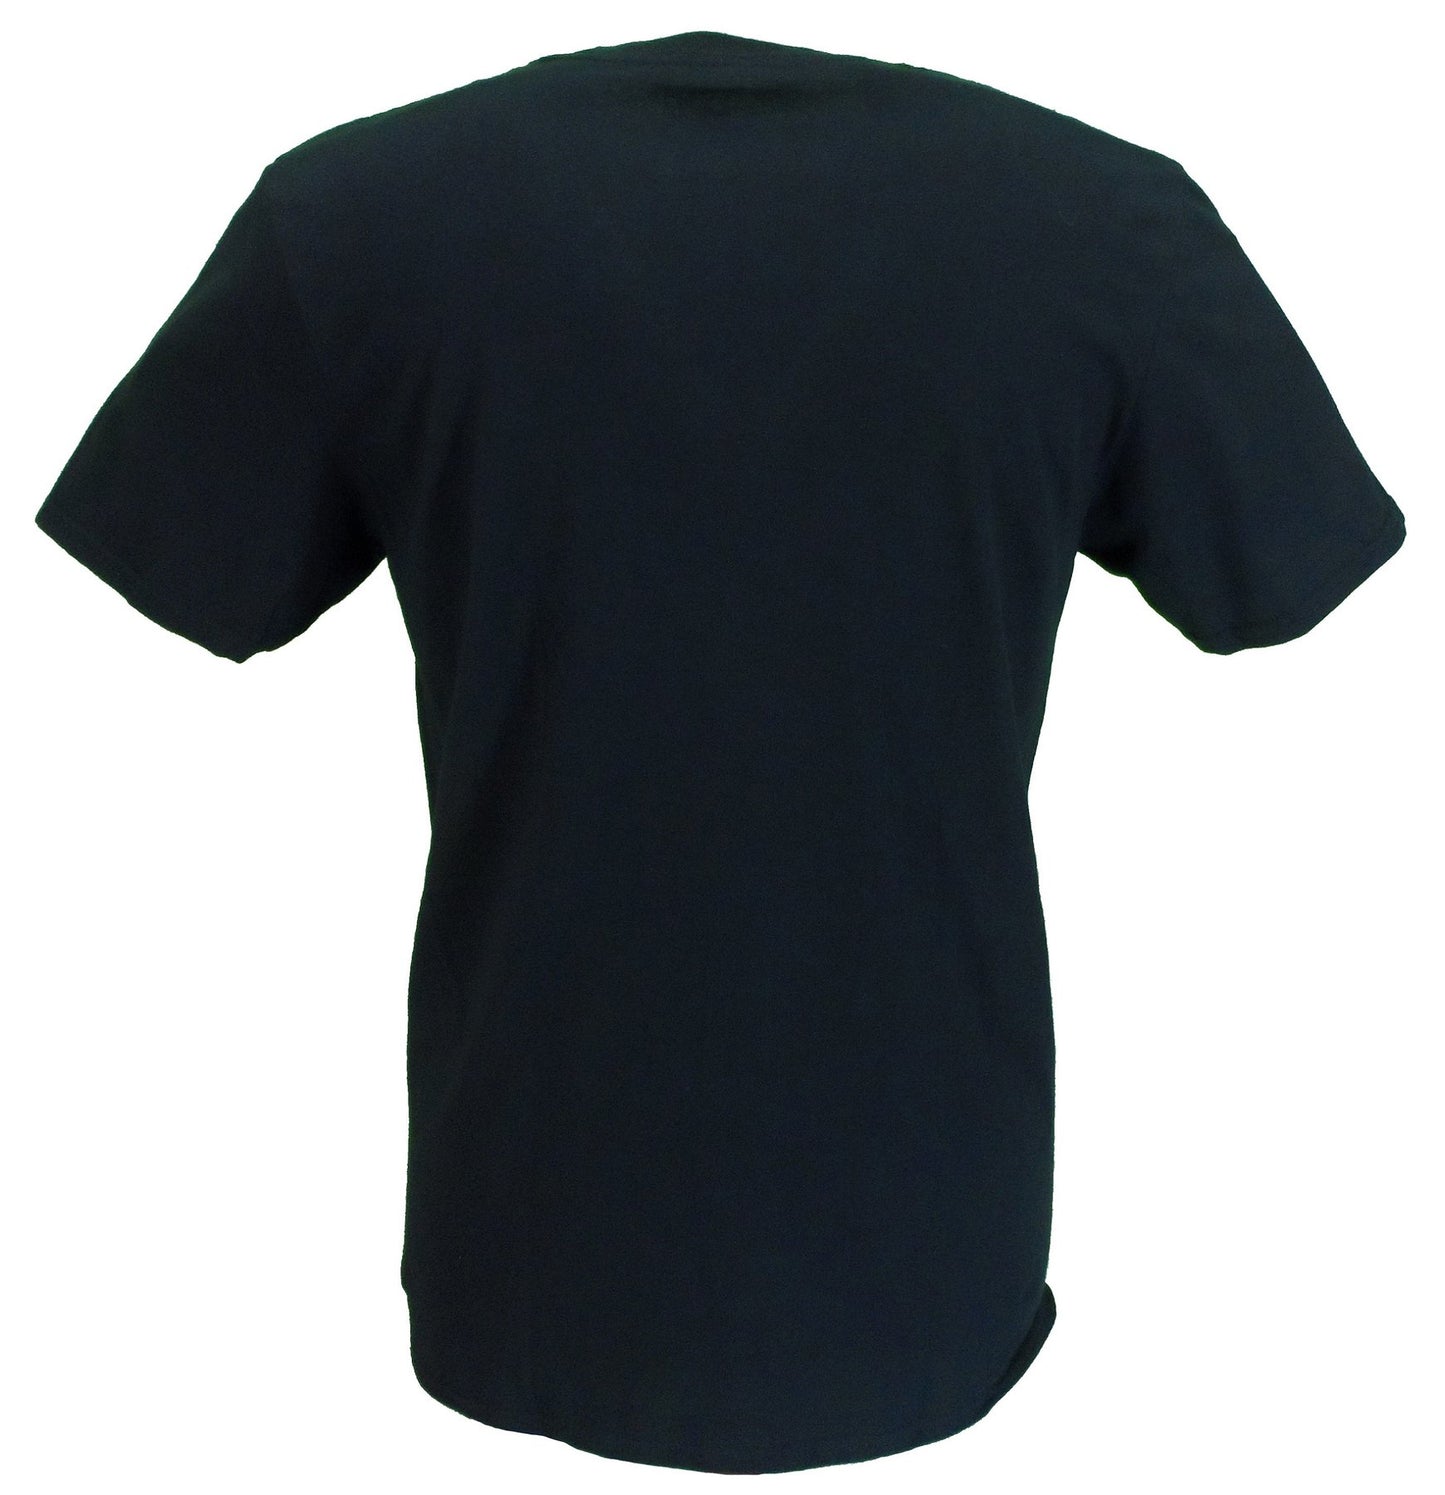 Camiseta oficial negra con logo de objetivo de caras pequeñas para hombre